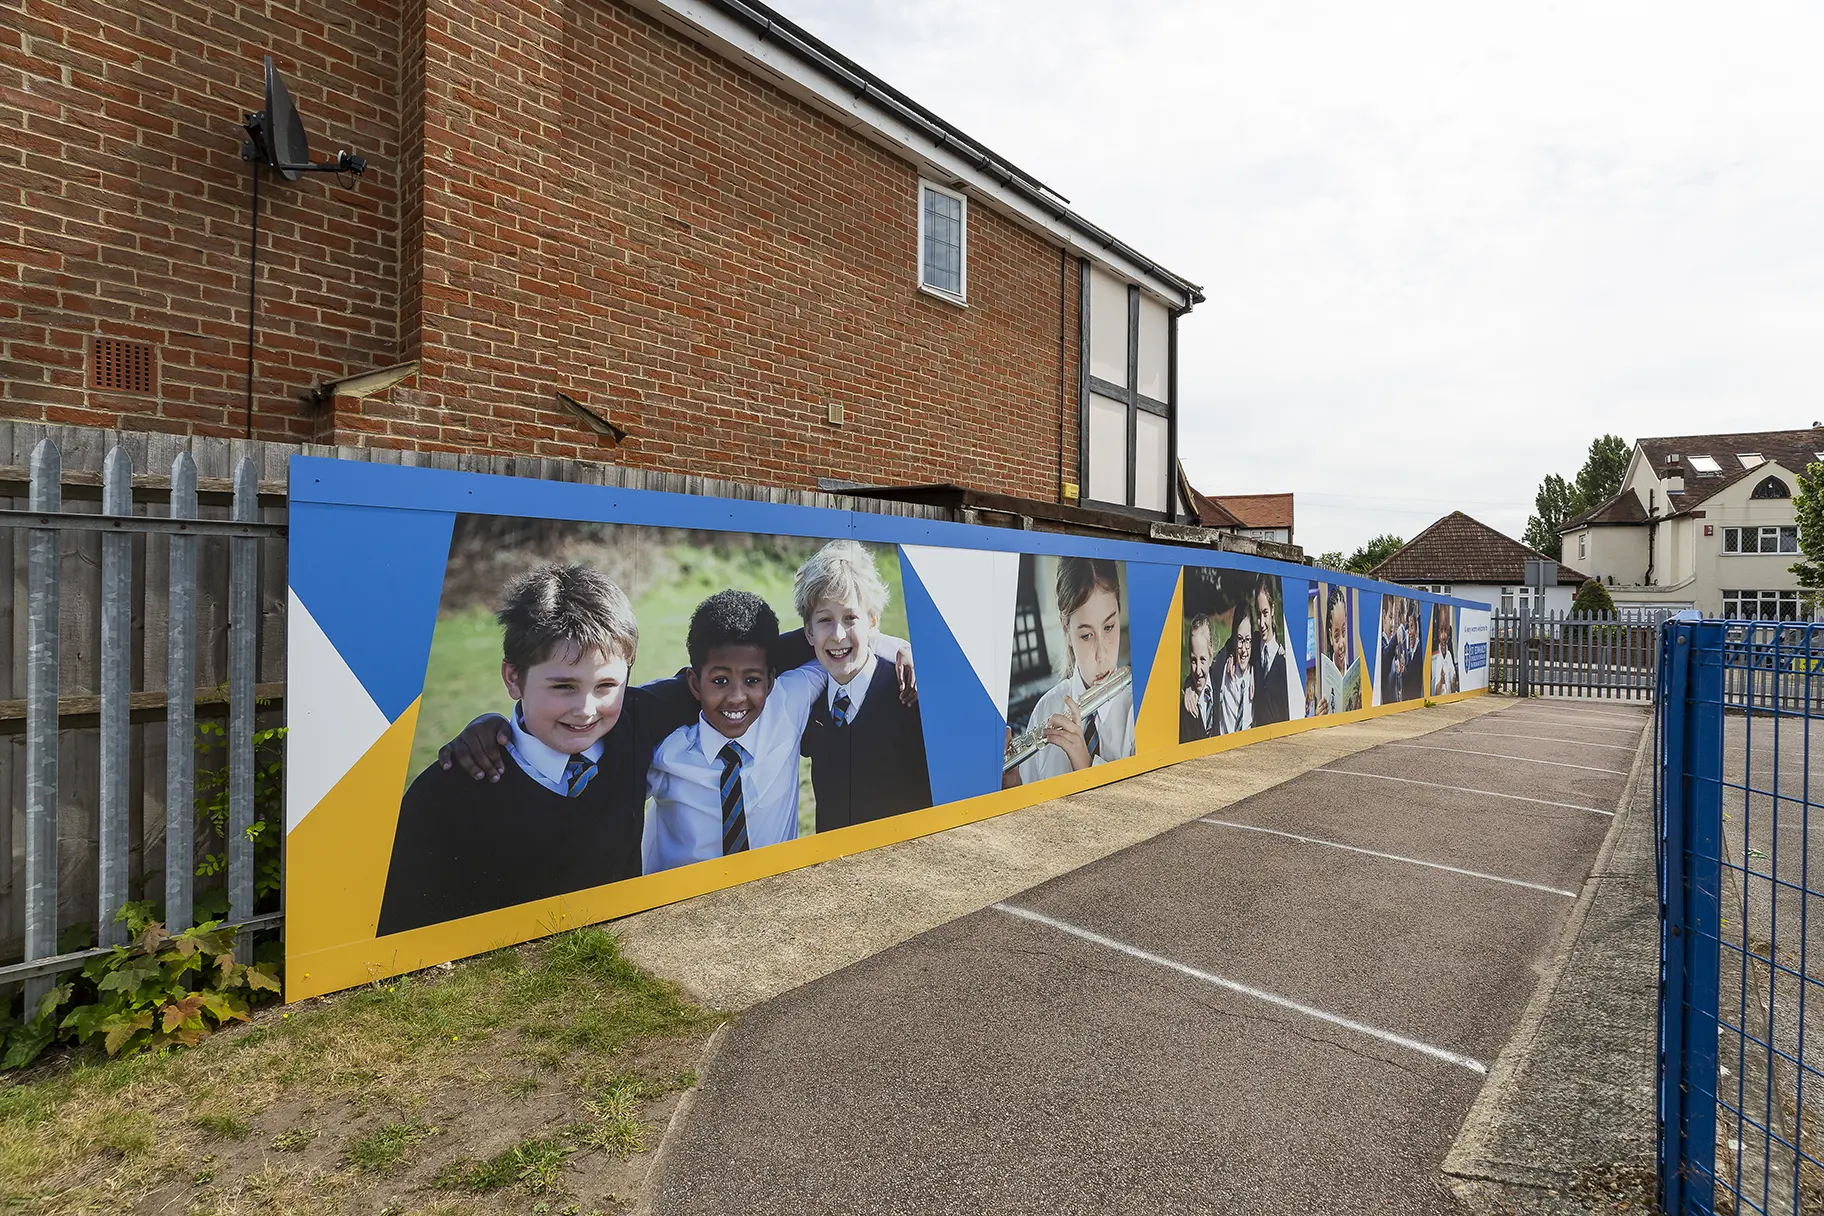 St Edwards external school wall art